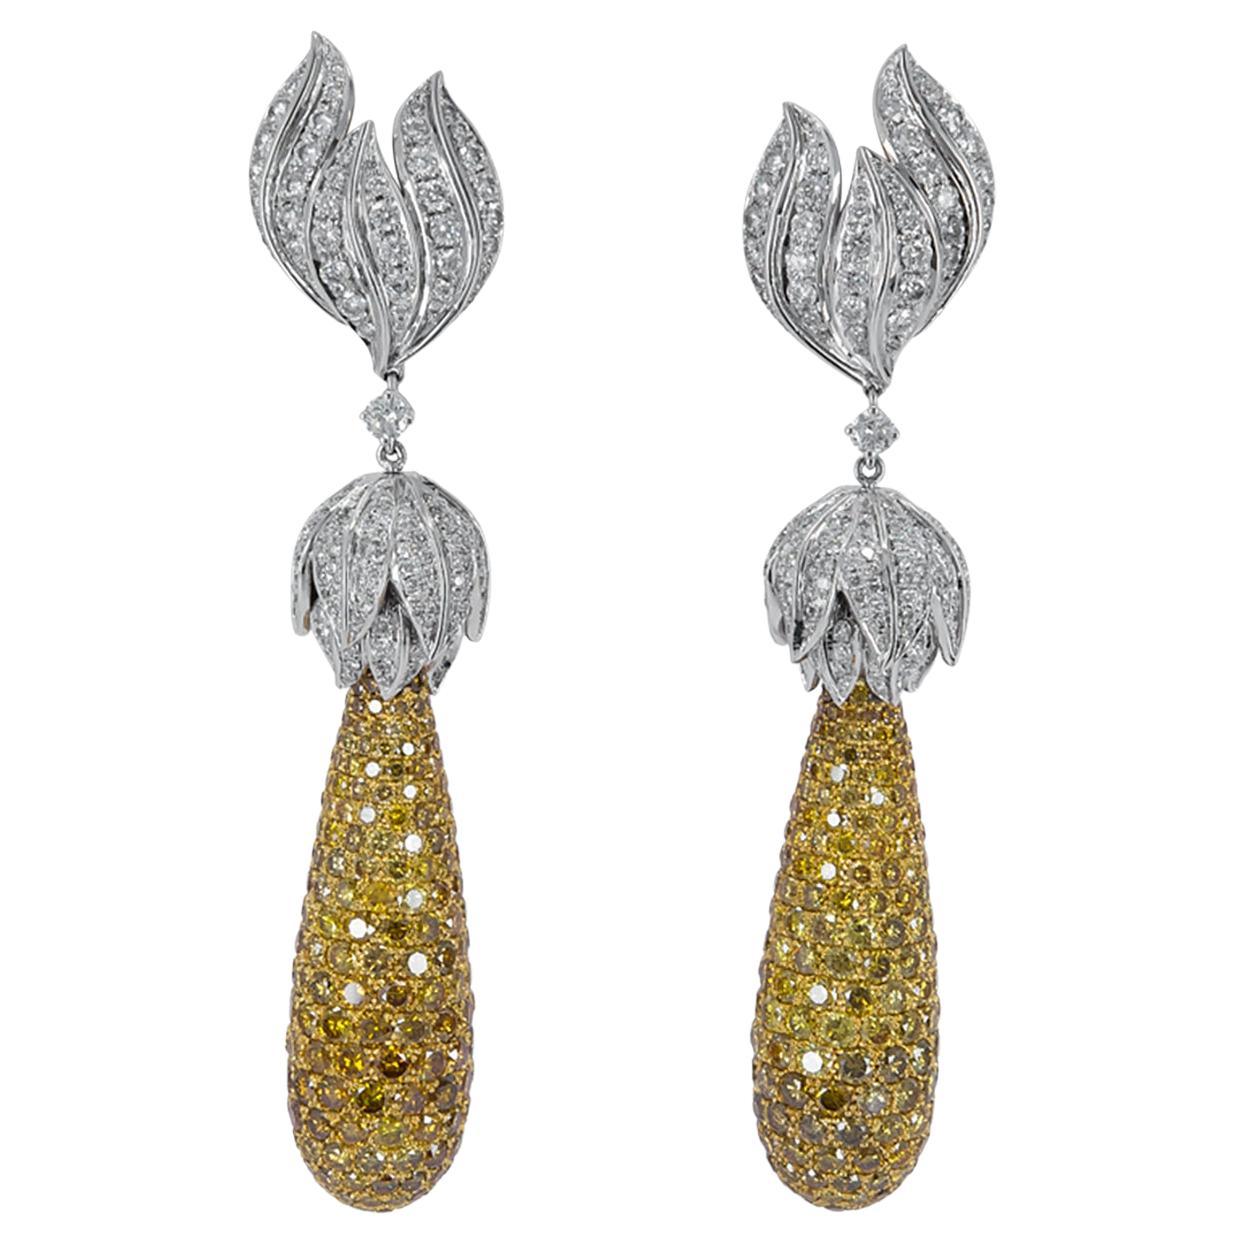 Spectra Fine Jewelry White & Yellow Diamond Earrings